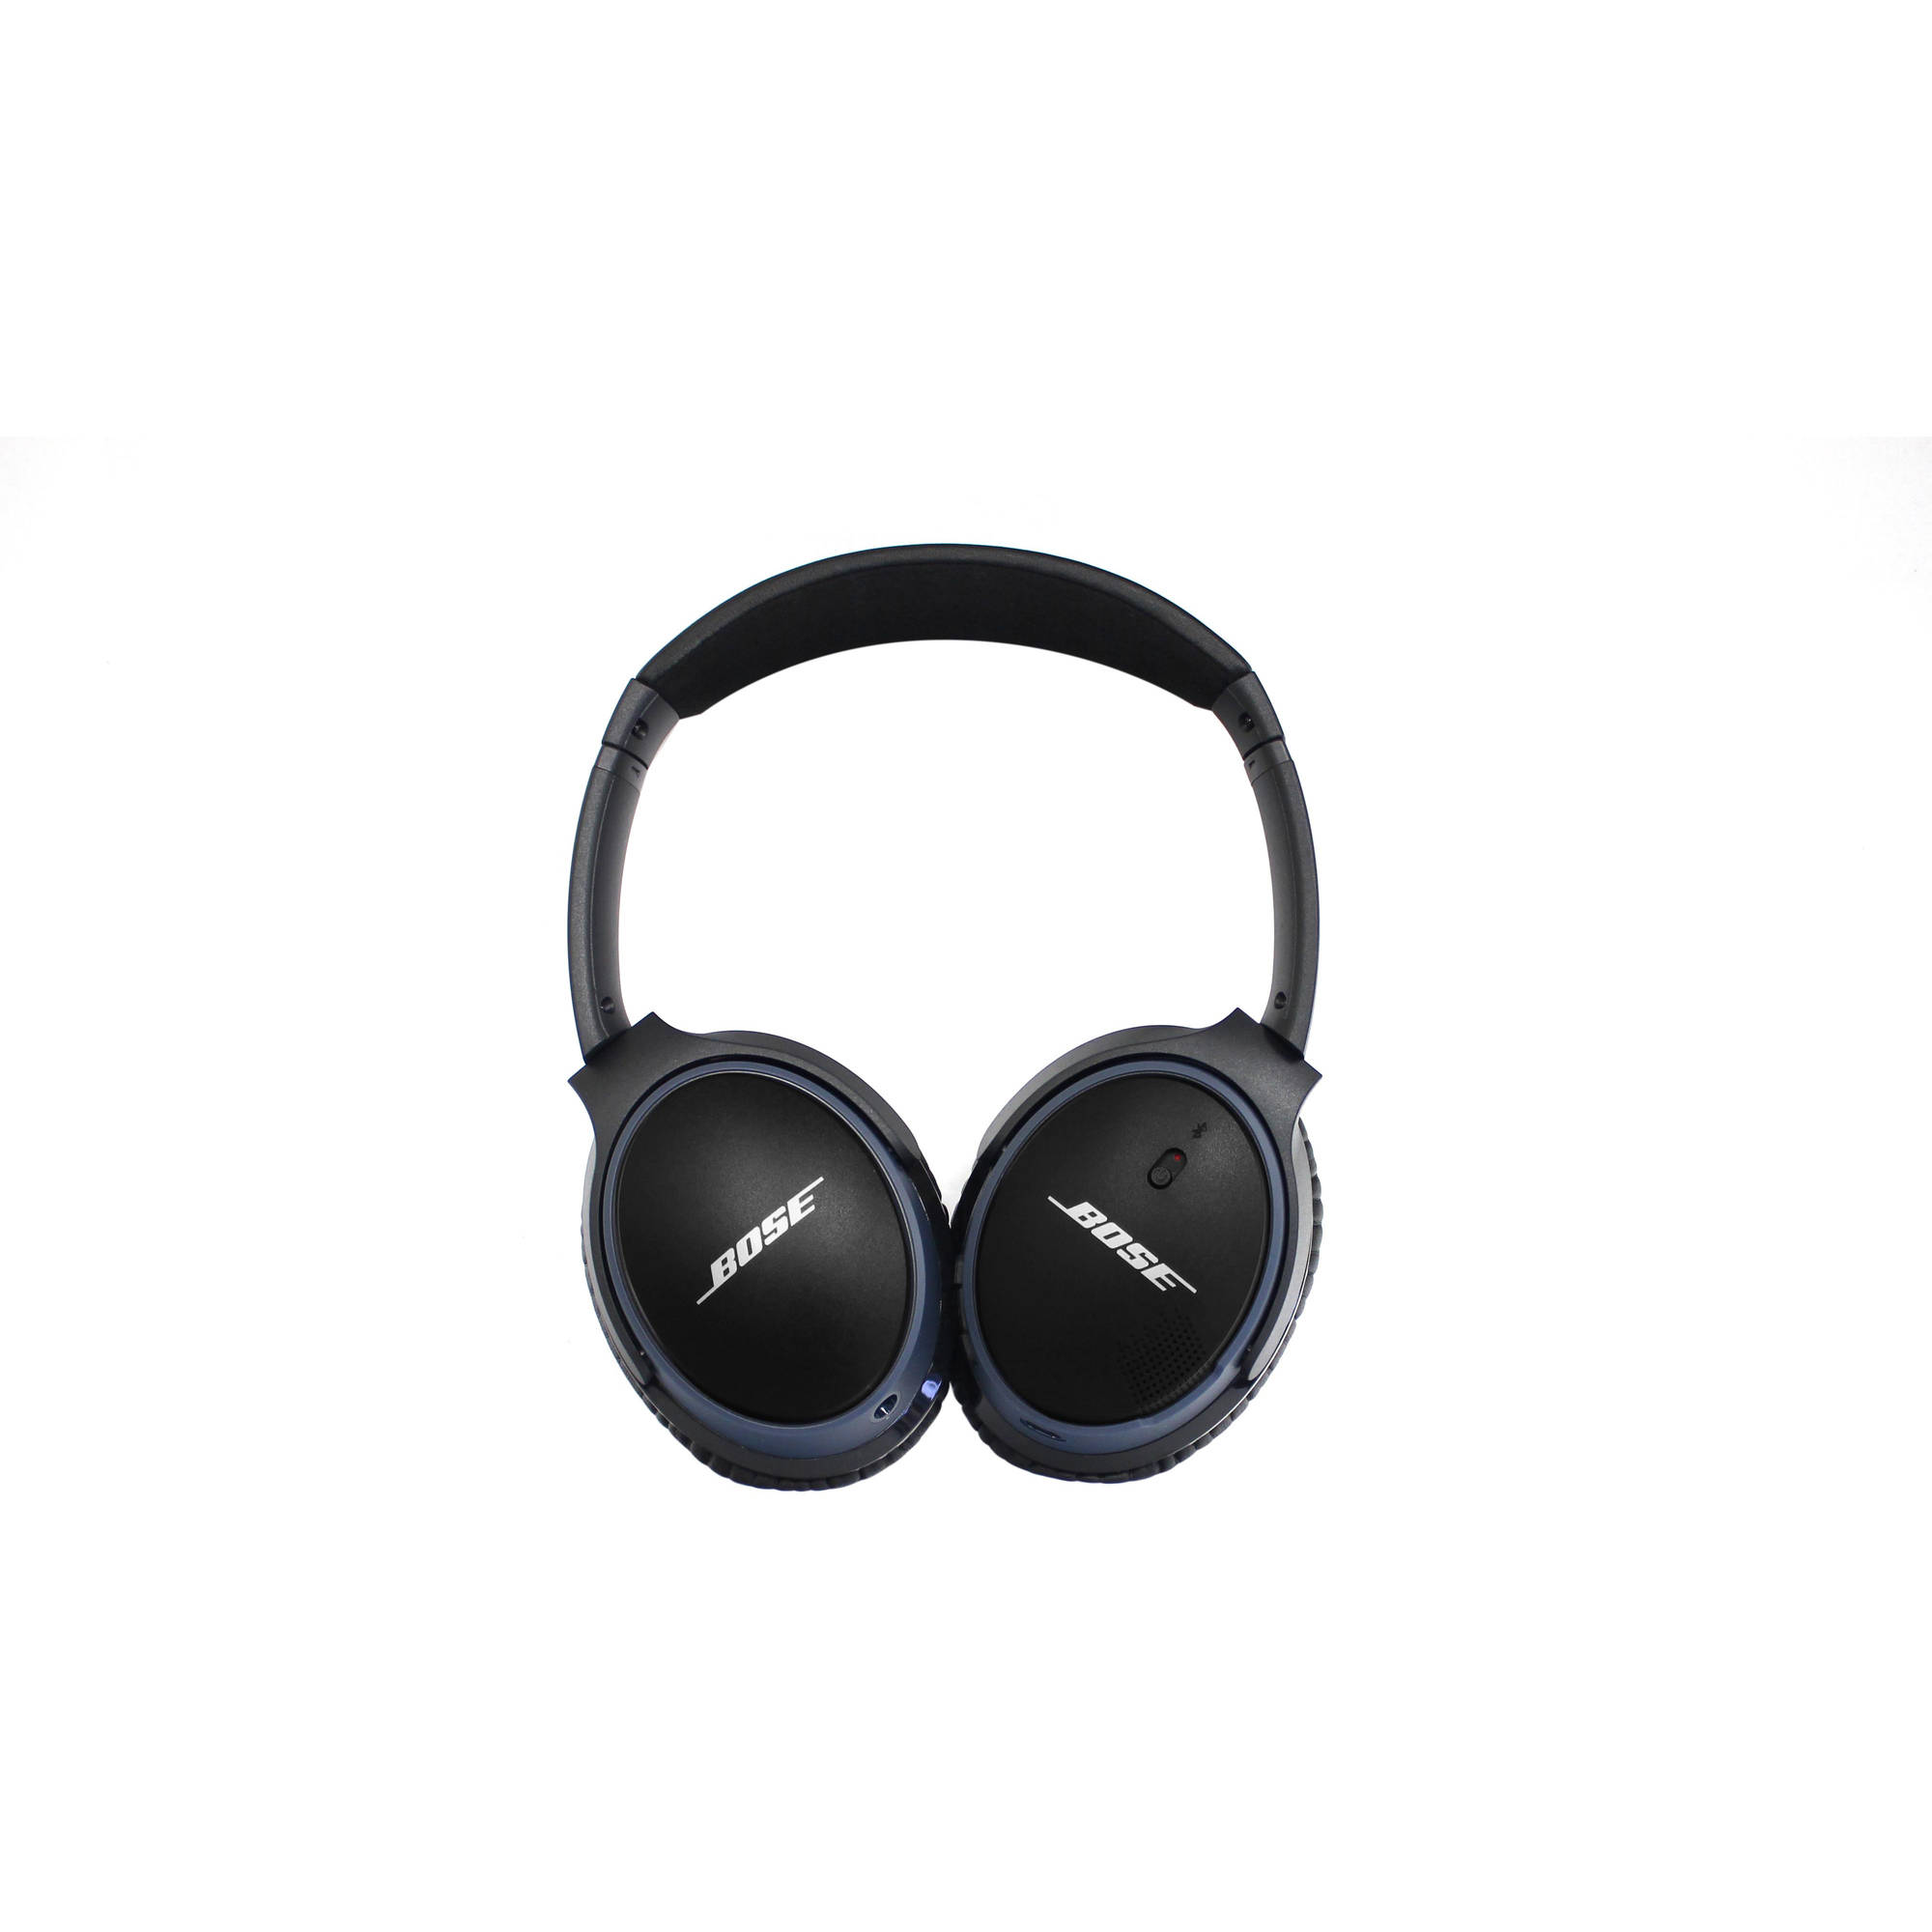 Bose SoundLink Around Ear Wireless Bluetooth Headphones II, Black - image 4 of 5